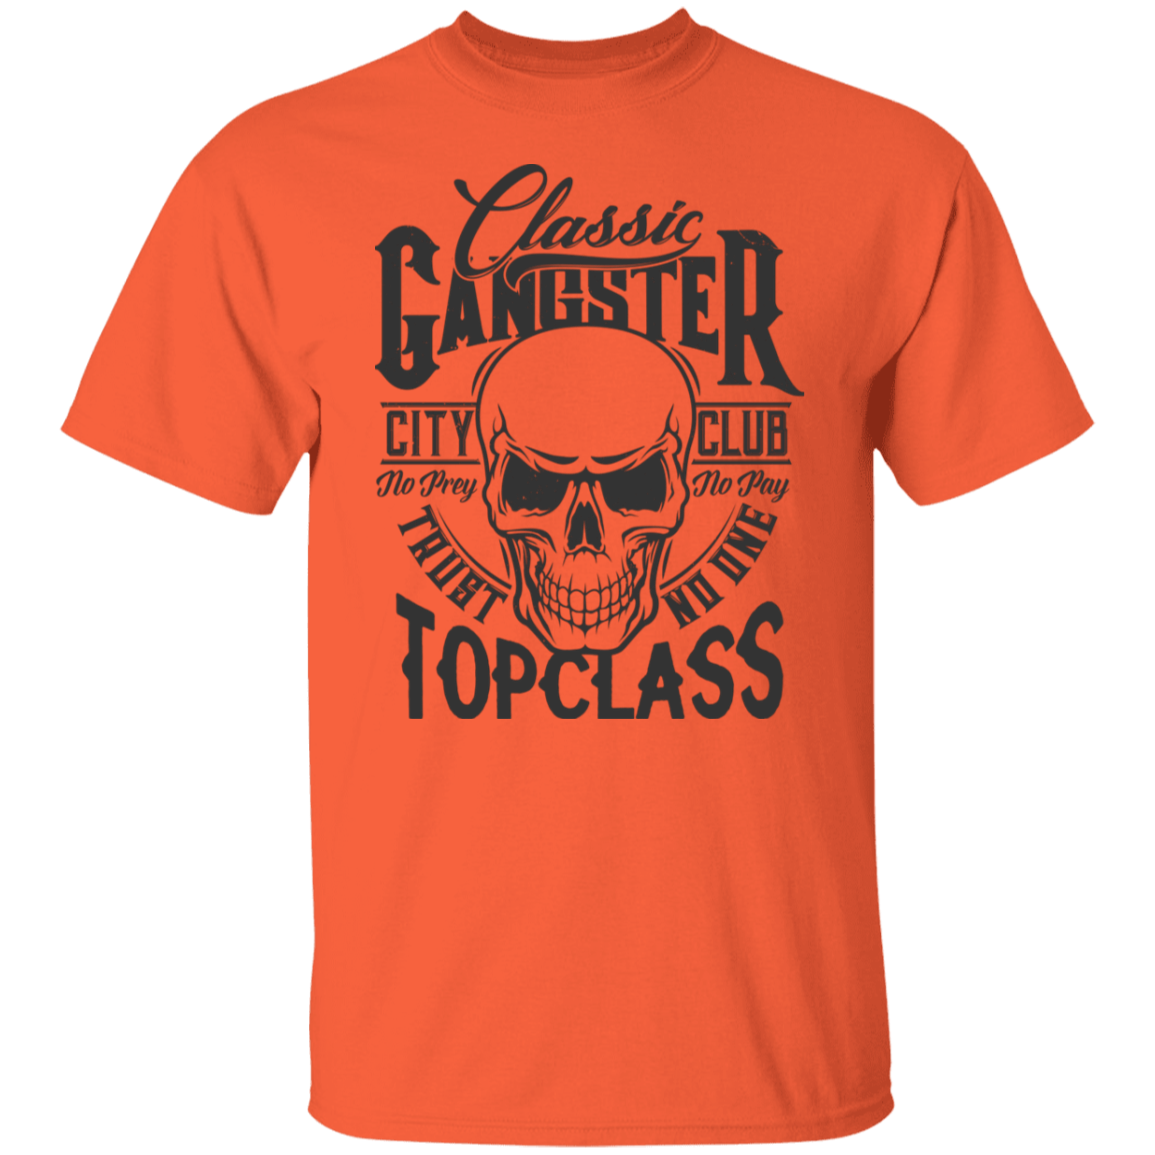 Topclass Classic Gangster Tshirt